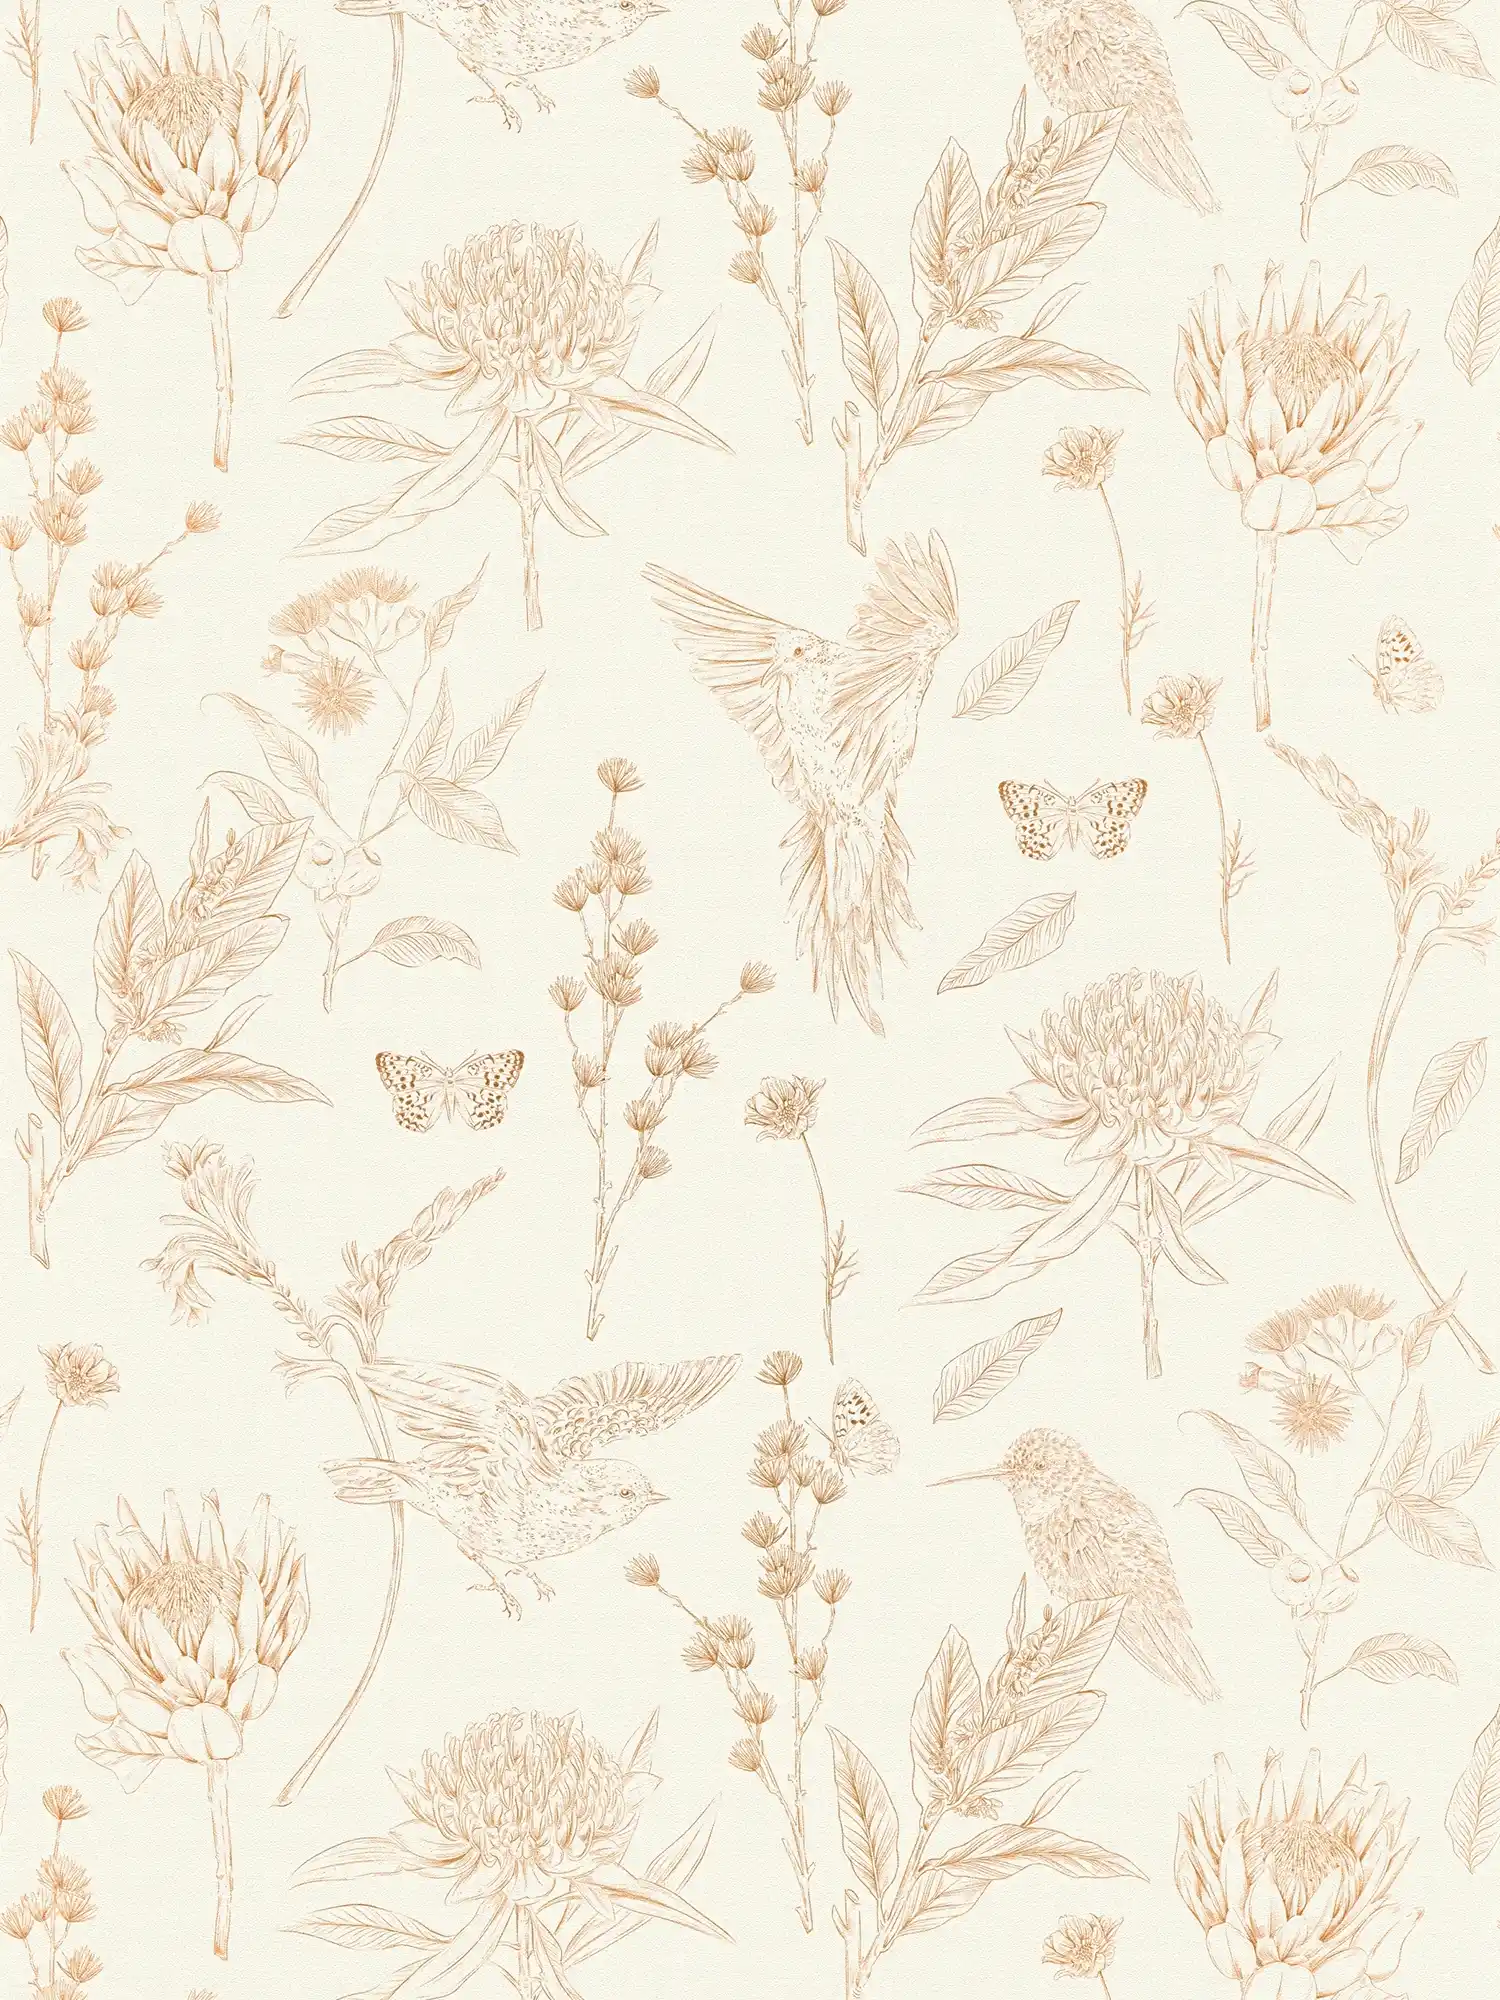         Floral wallpaper with leaves & animals textured matt - white, brown, beige
    